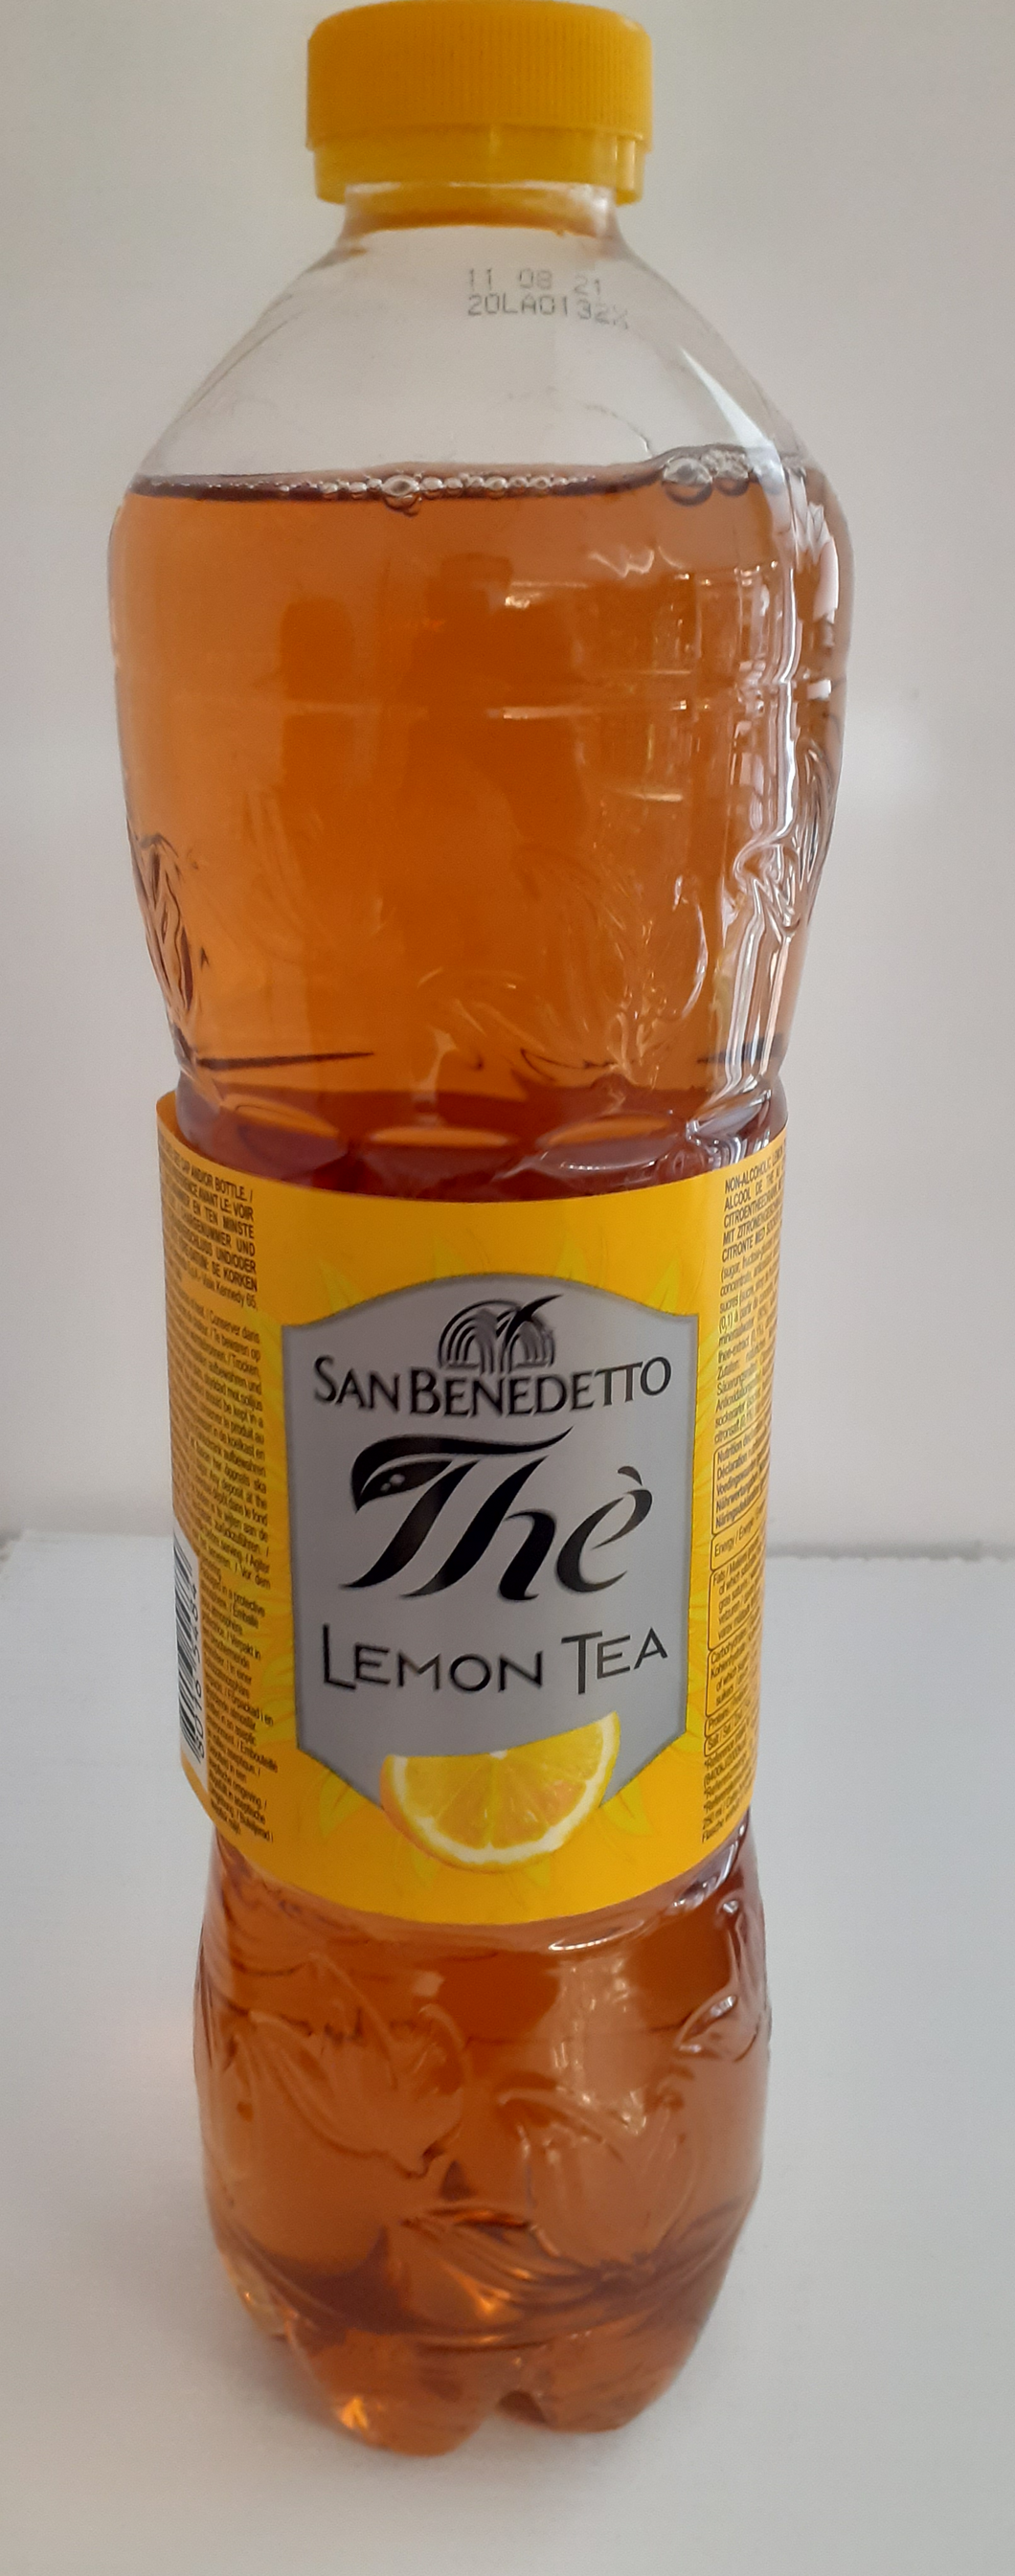 Sanbenedetto - Lemon The (Lemon Tea)